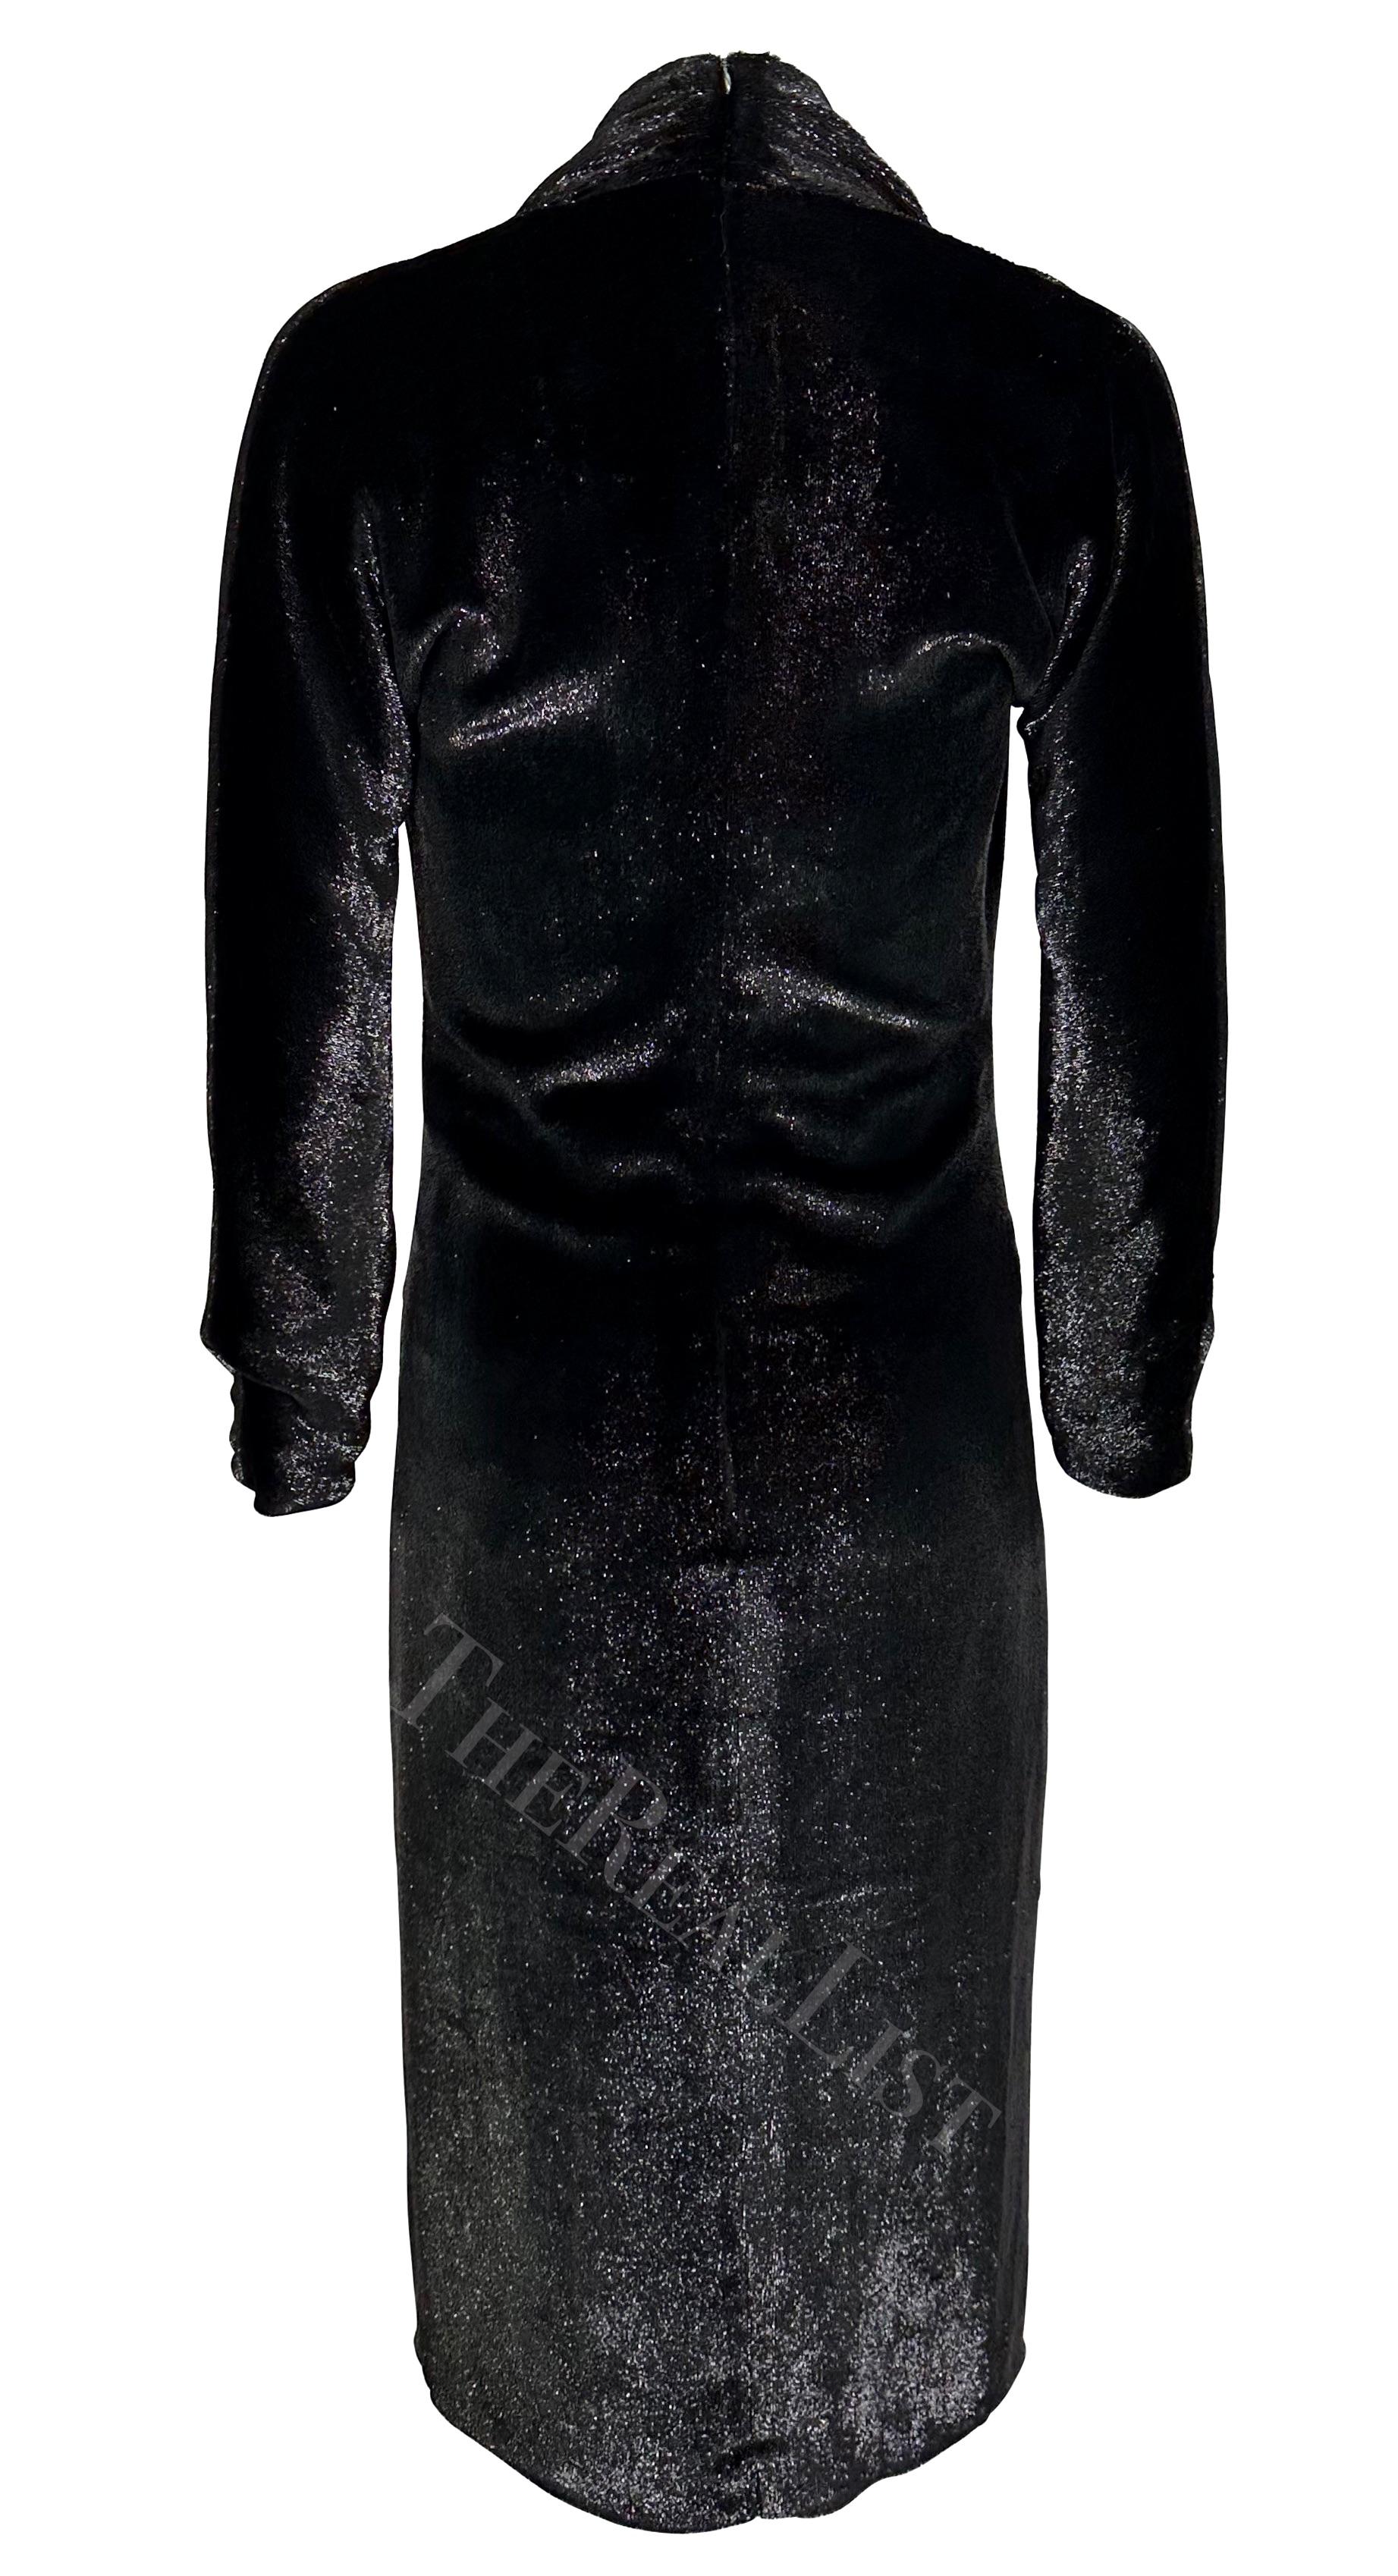 F/W 2000 Yves Saint Laurent by Alber Elbaz Black Sparkle Plunging Runway Dress For Sale 2